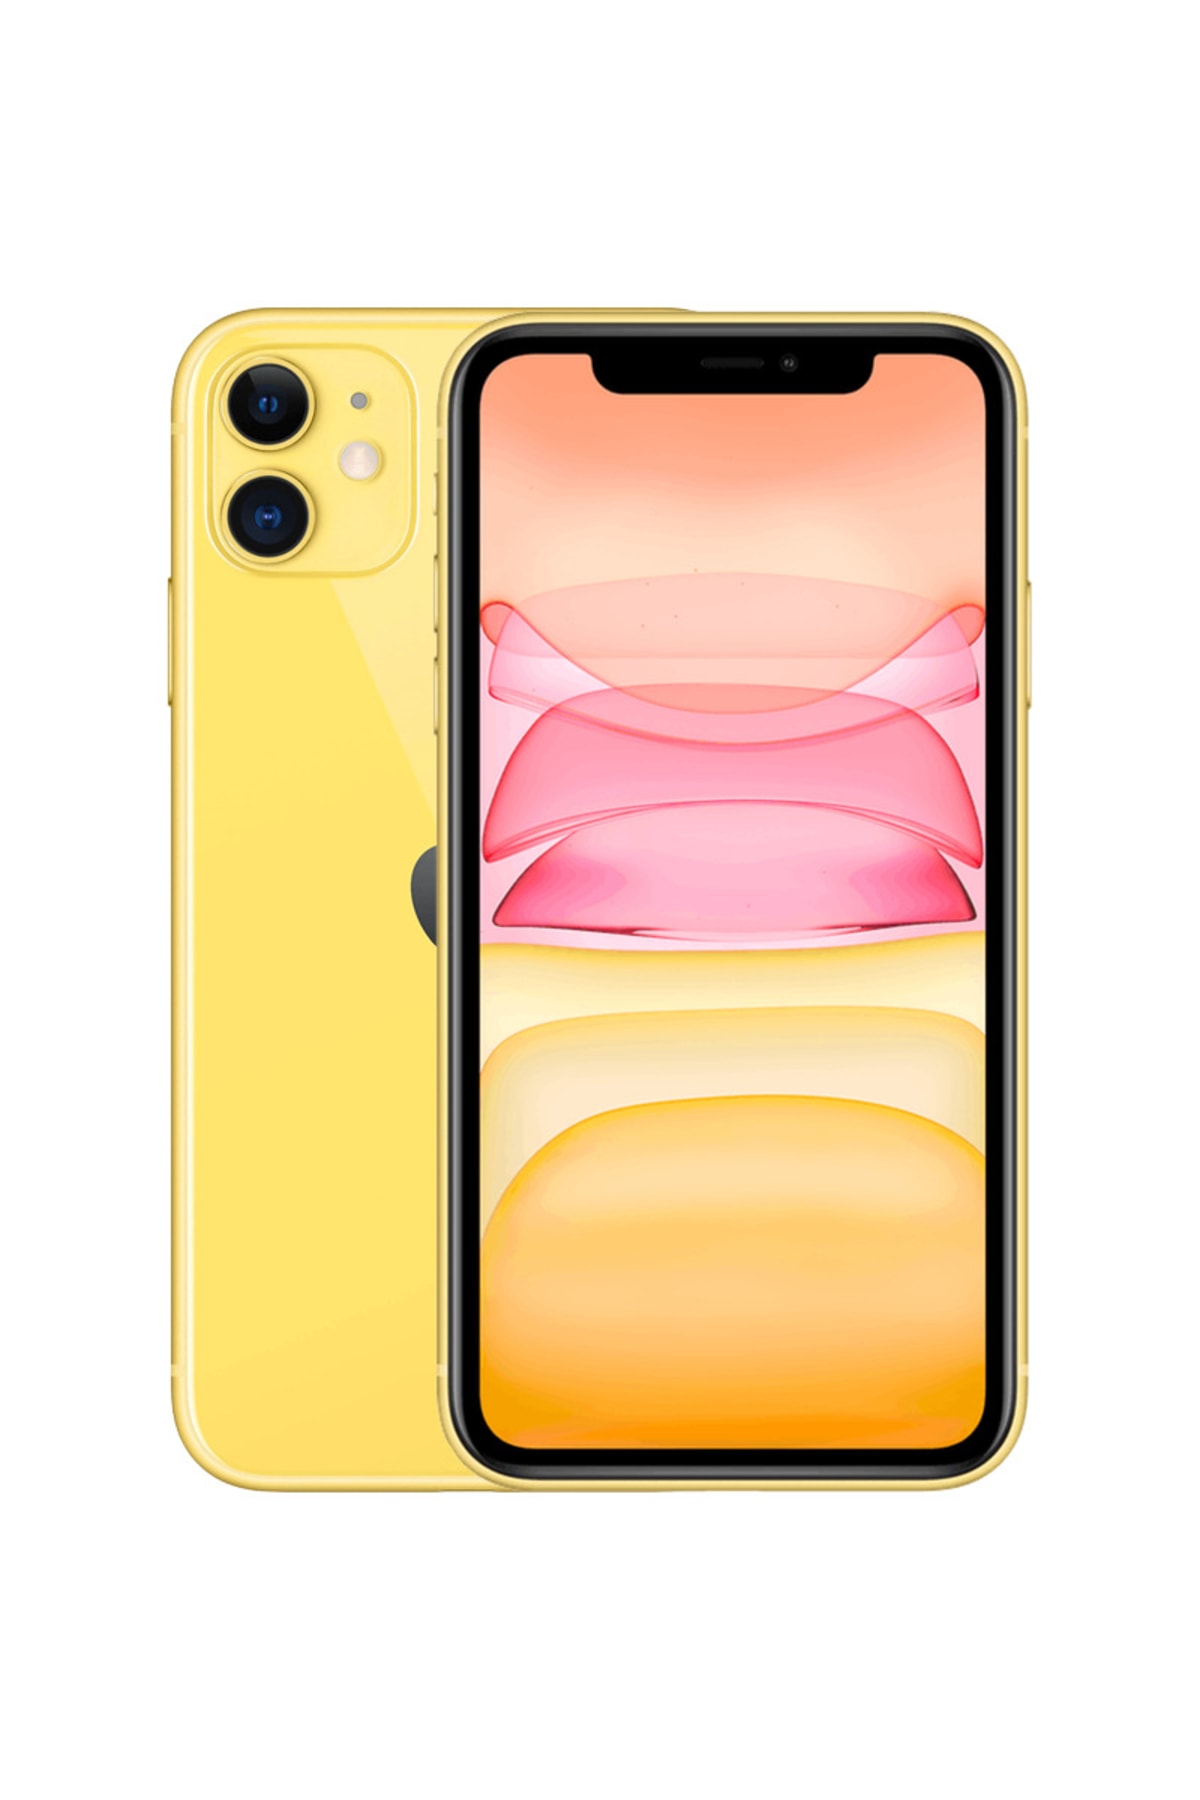 Apple Yenilenmiş iPhone 11 64 GB Sarı Cep Telefonu (12 Ay Garantili)